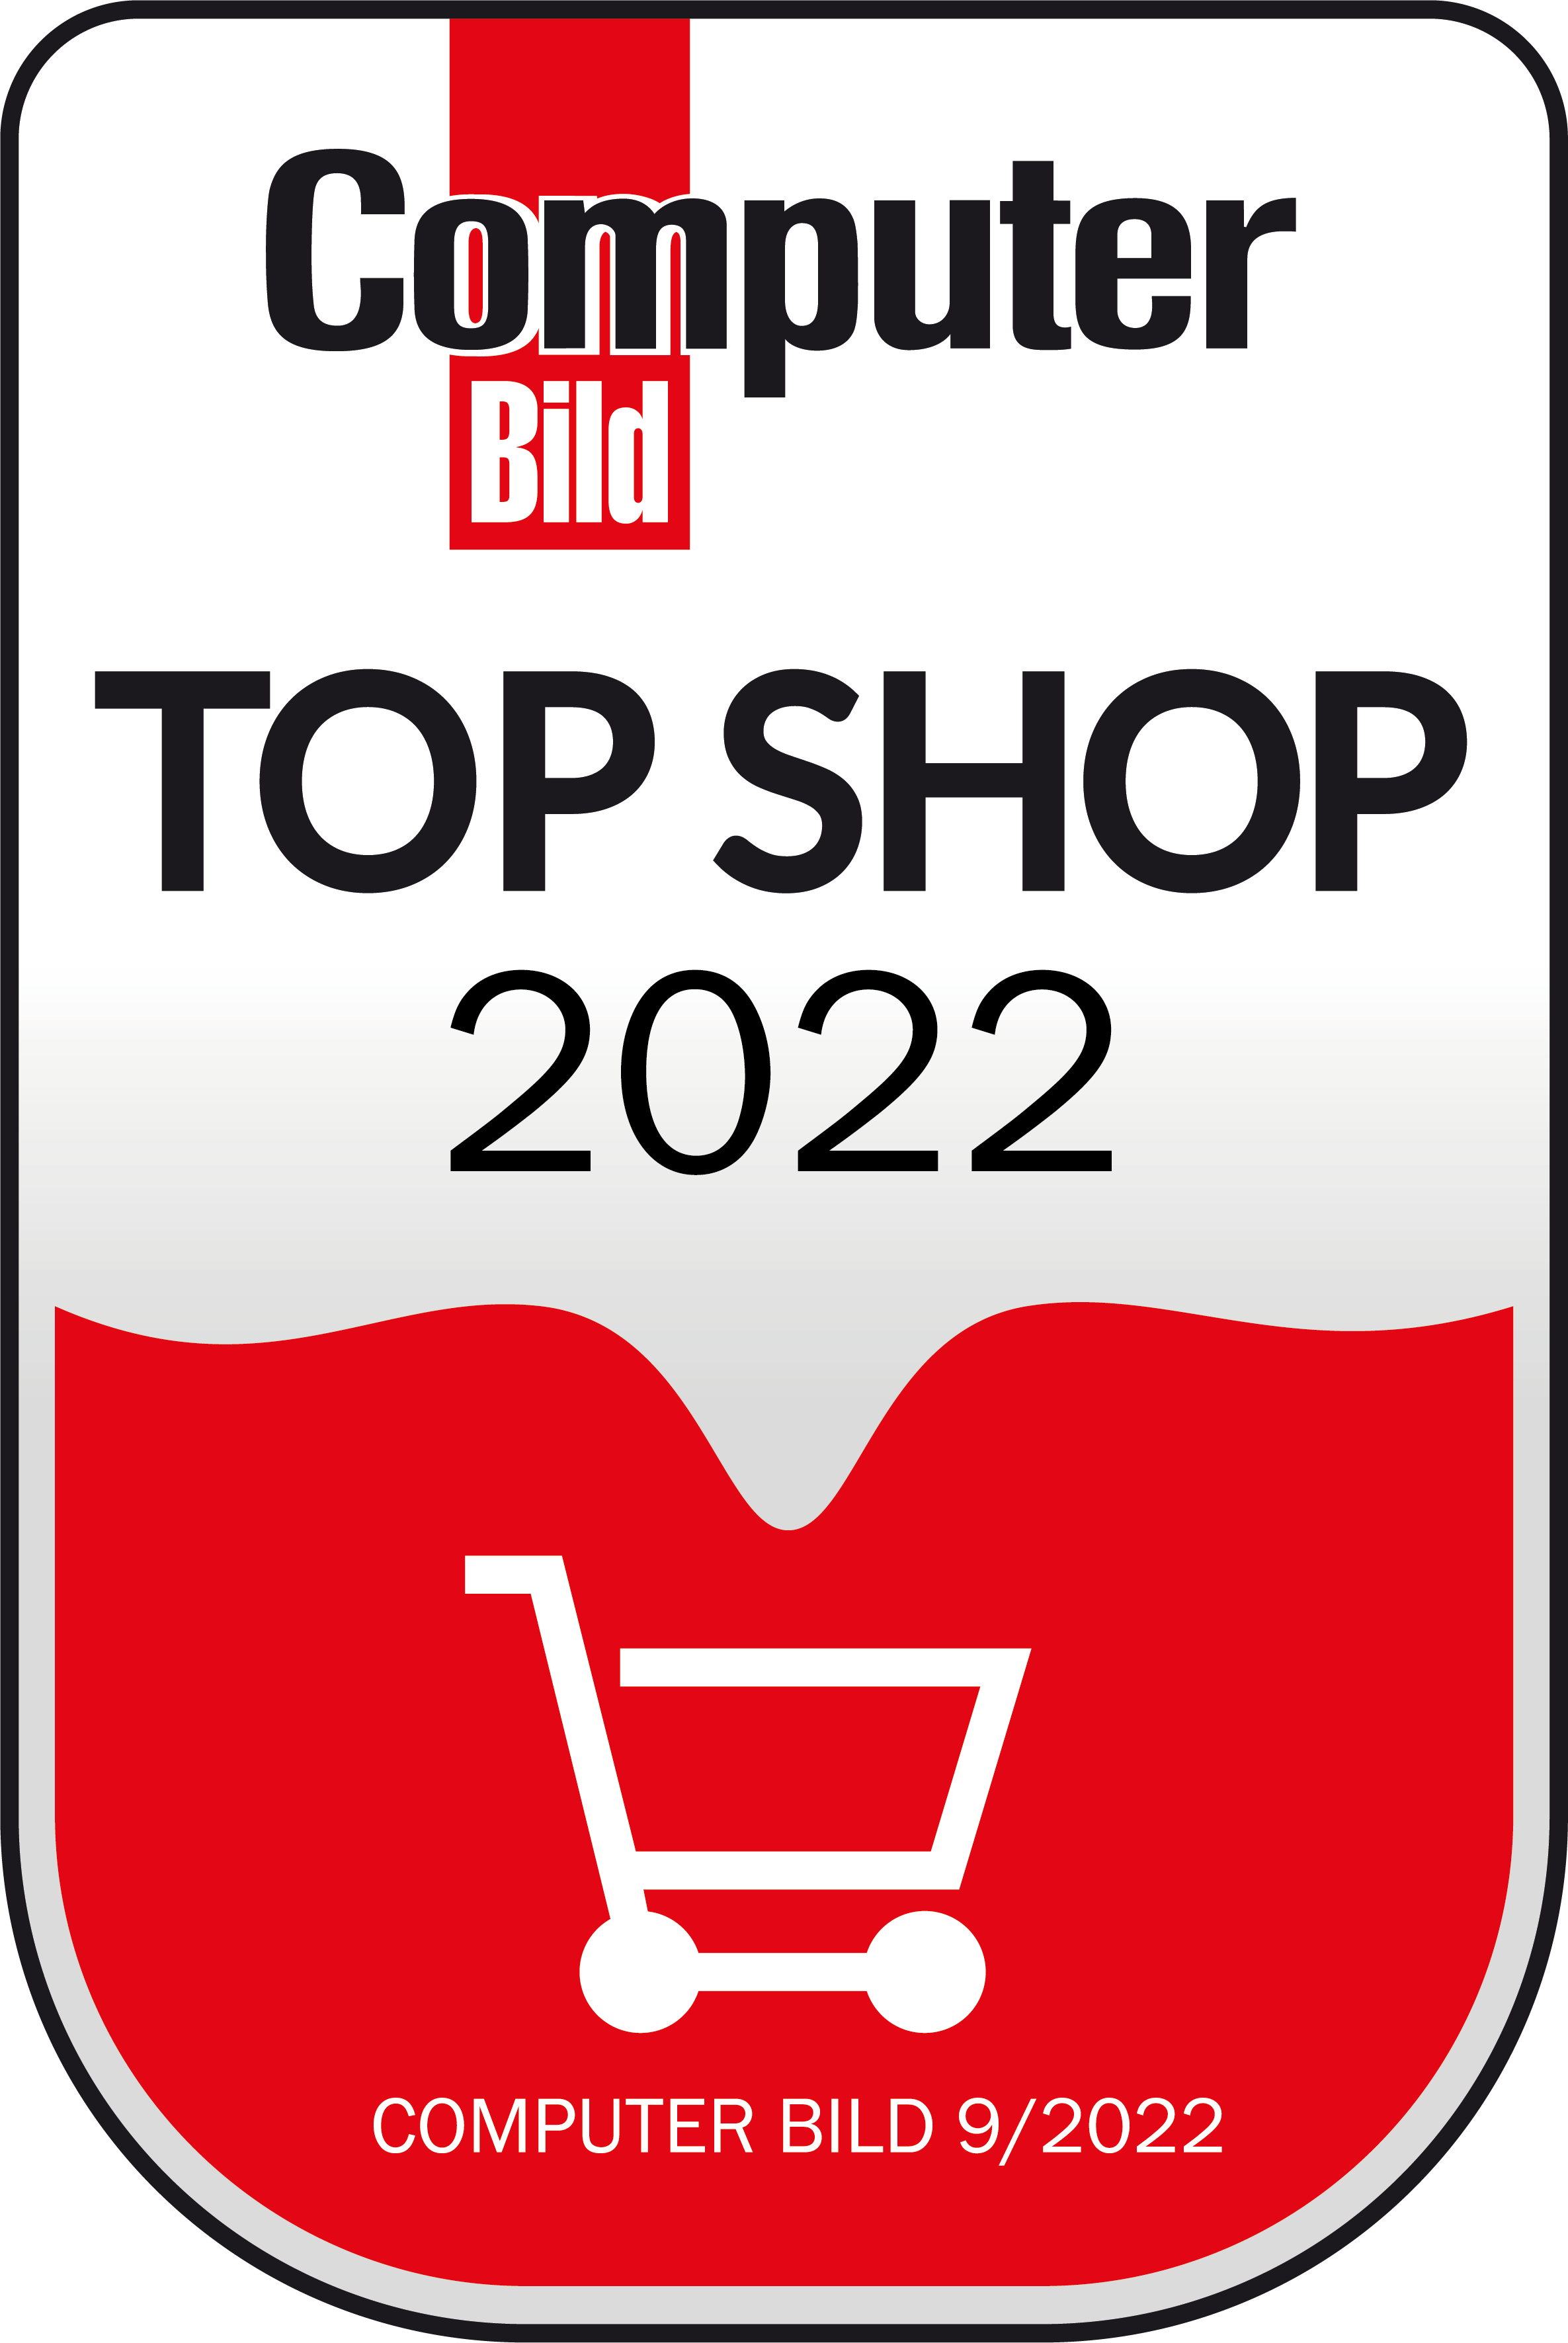 TopShop 2022 Computerbild 9/2022 Lebensmittel & Gesundheit - Medikamente